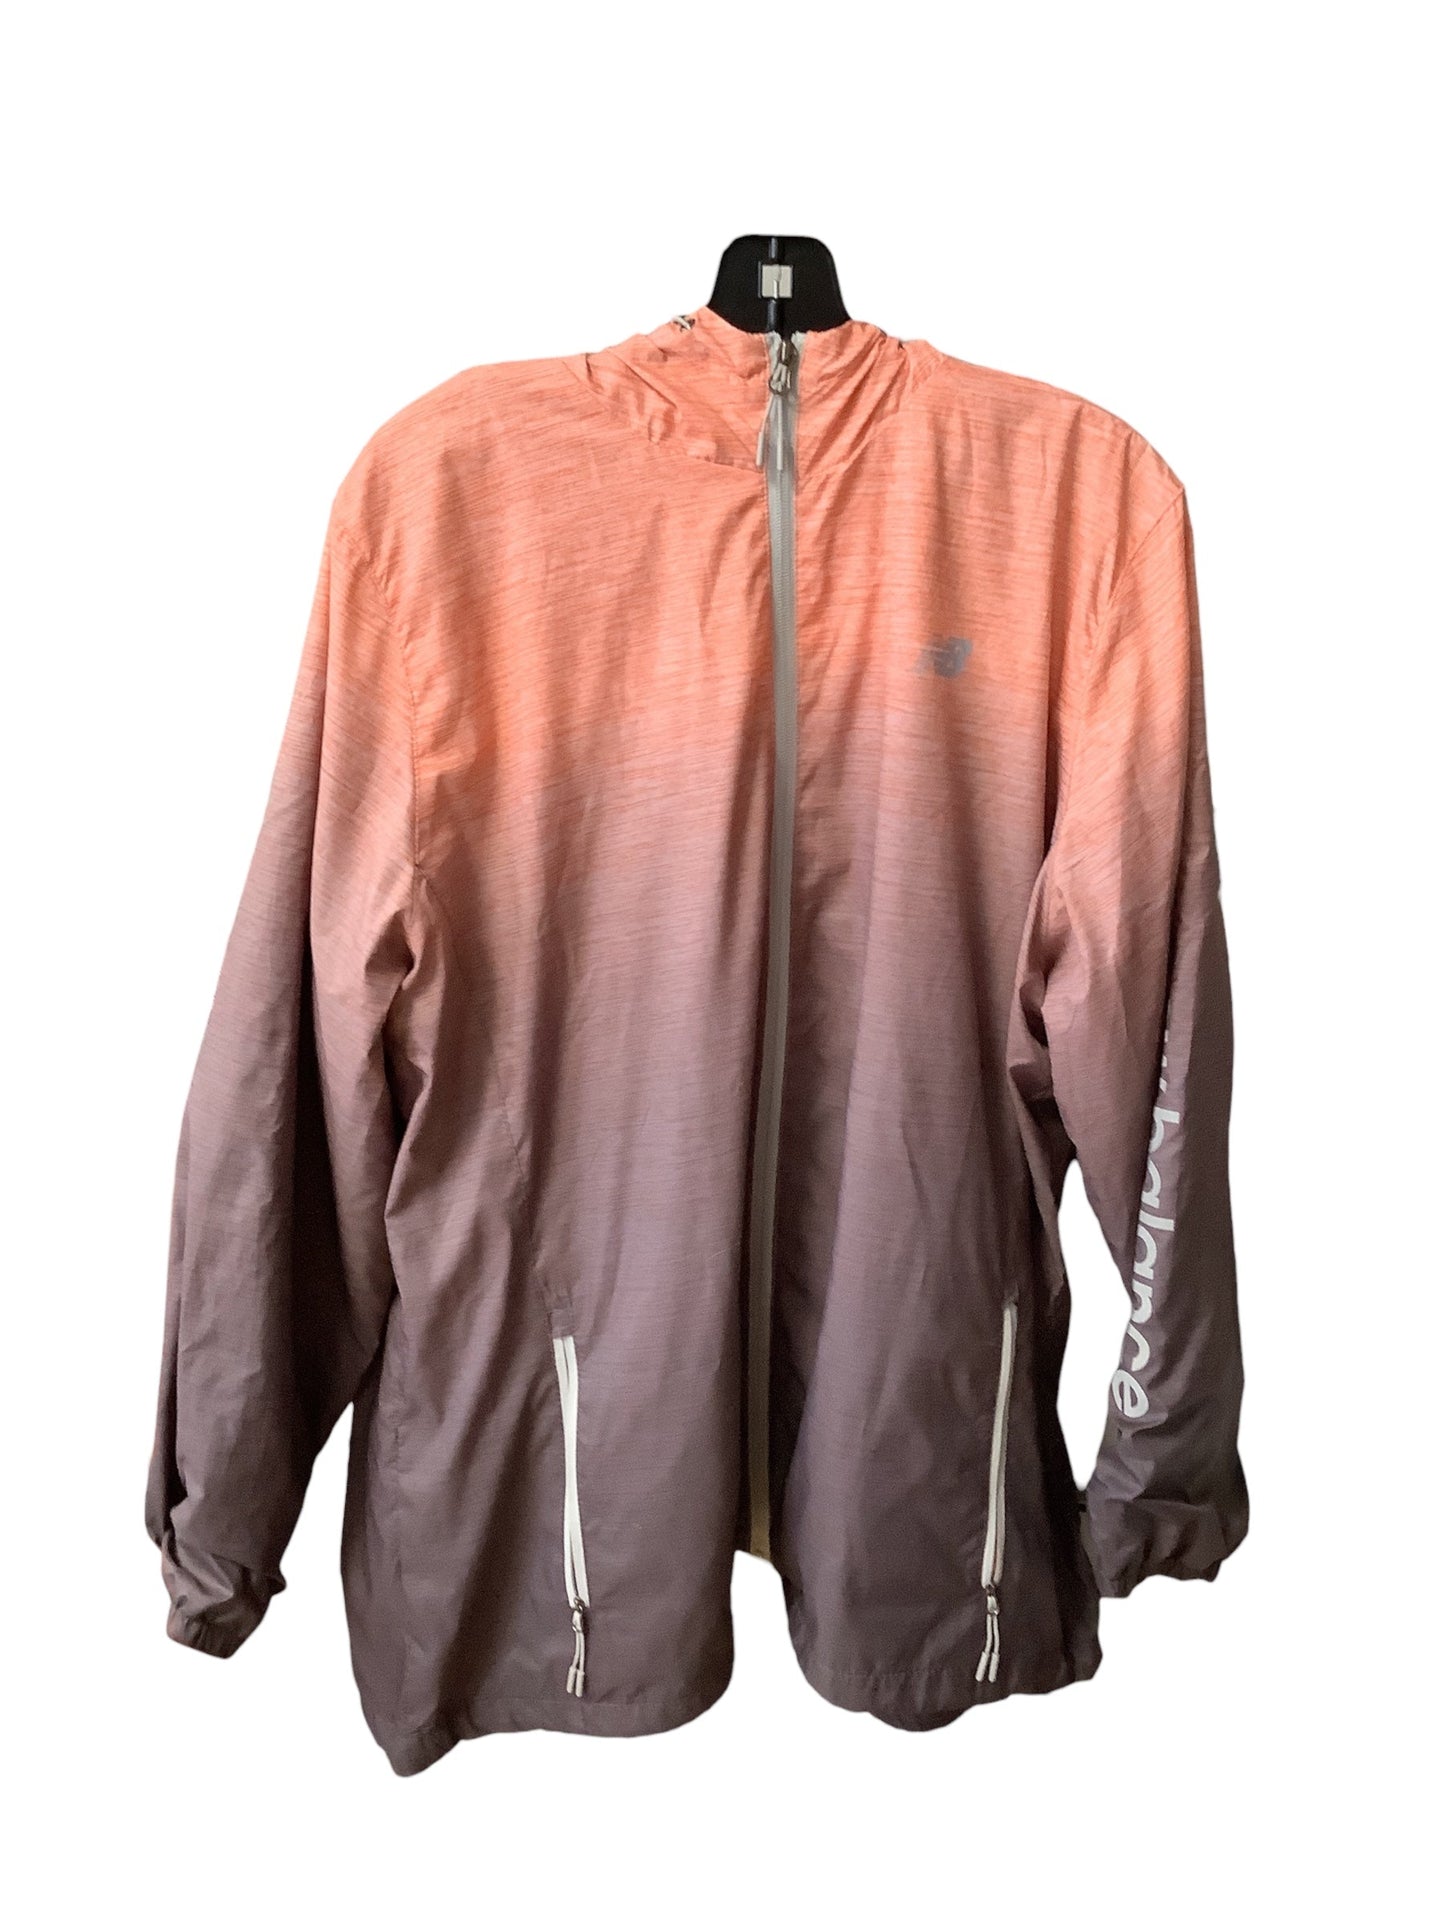 Coral Athletic Jacket New Balance, Size 2x